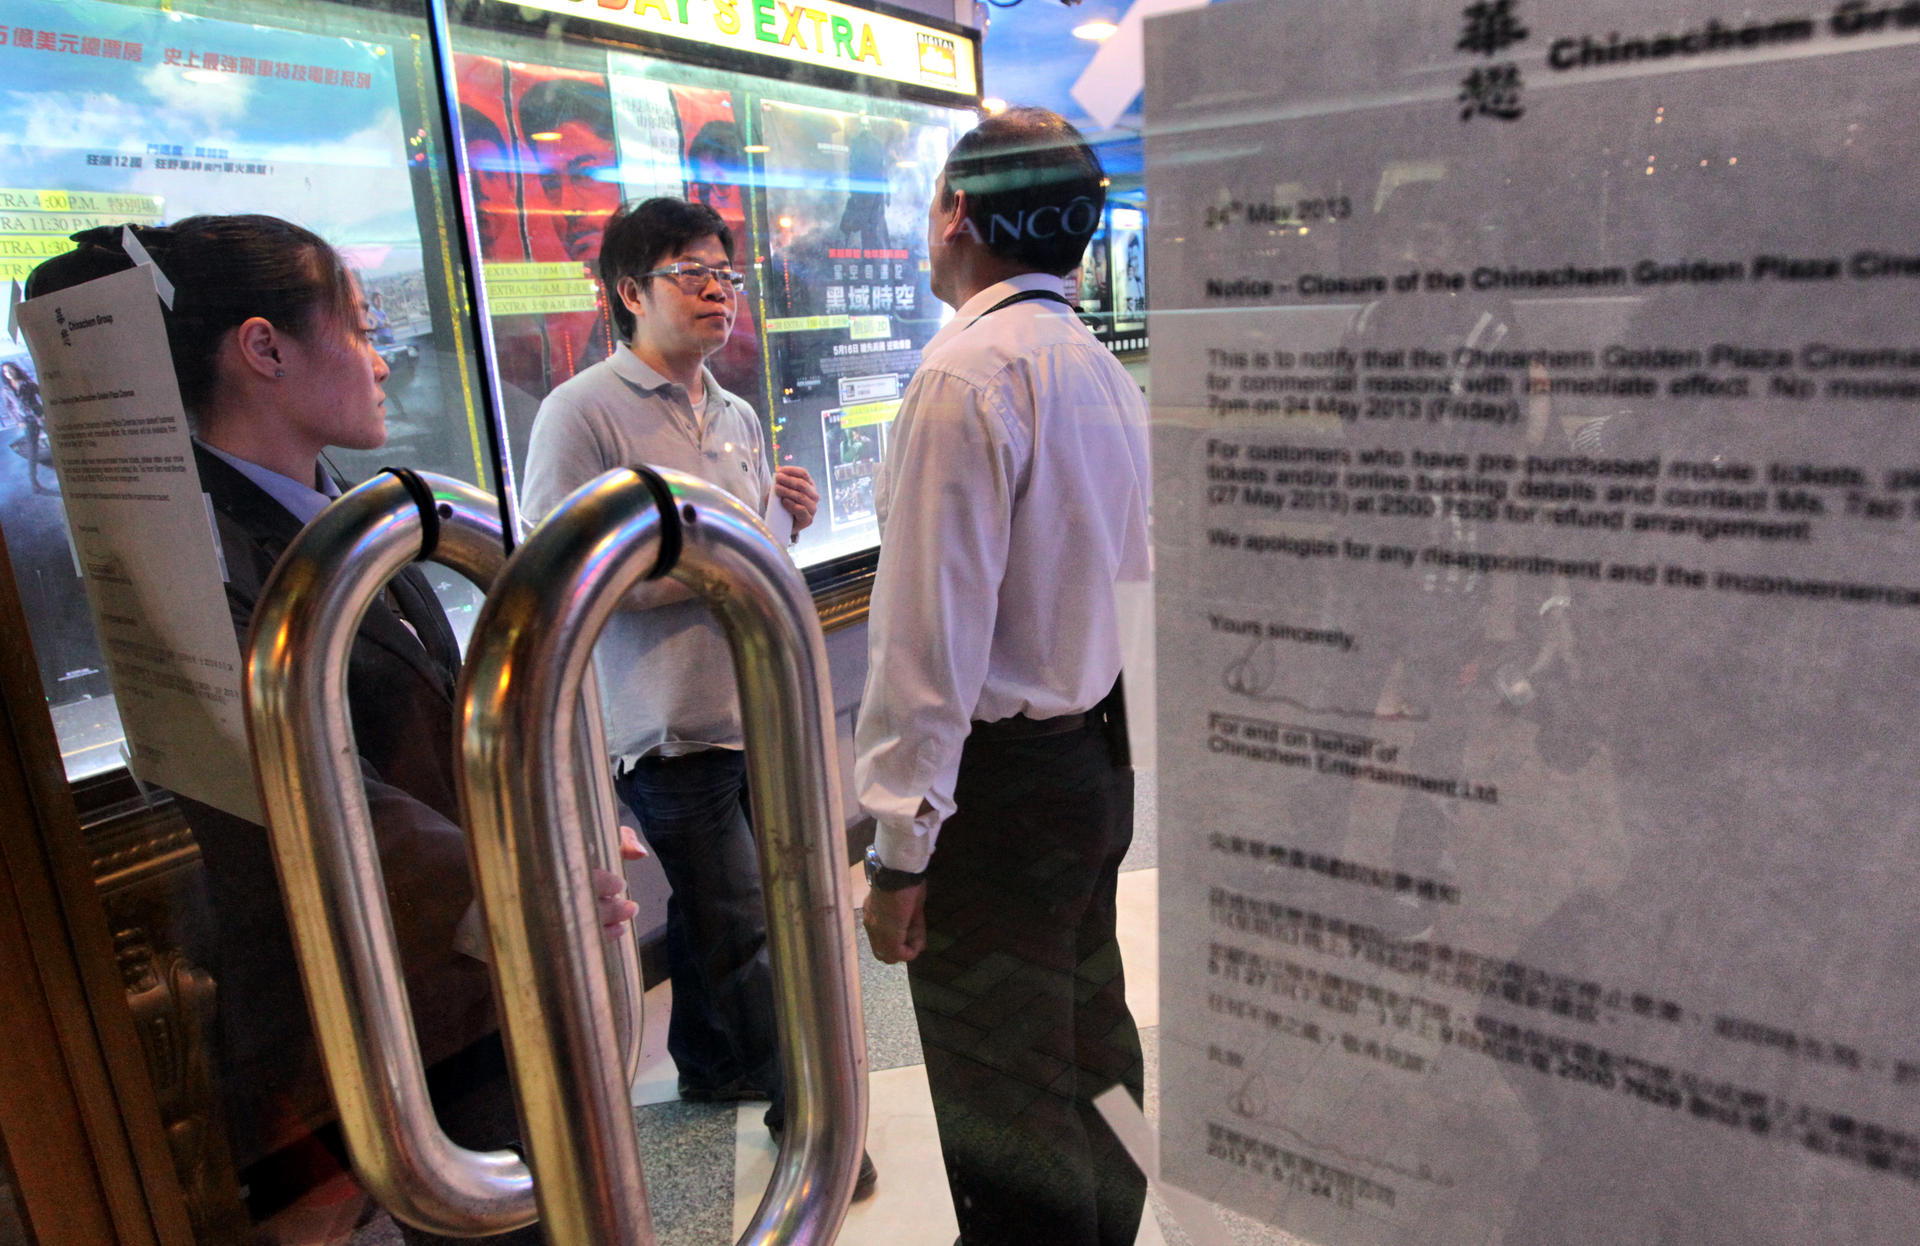 The Chinachem cinema announces its closure. Photo: Felix Wong